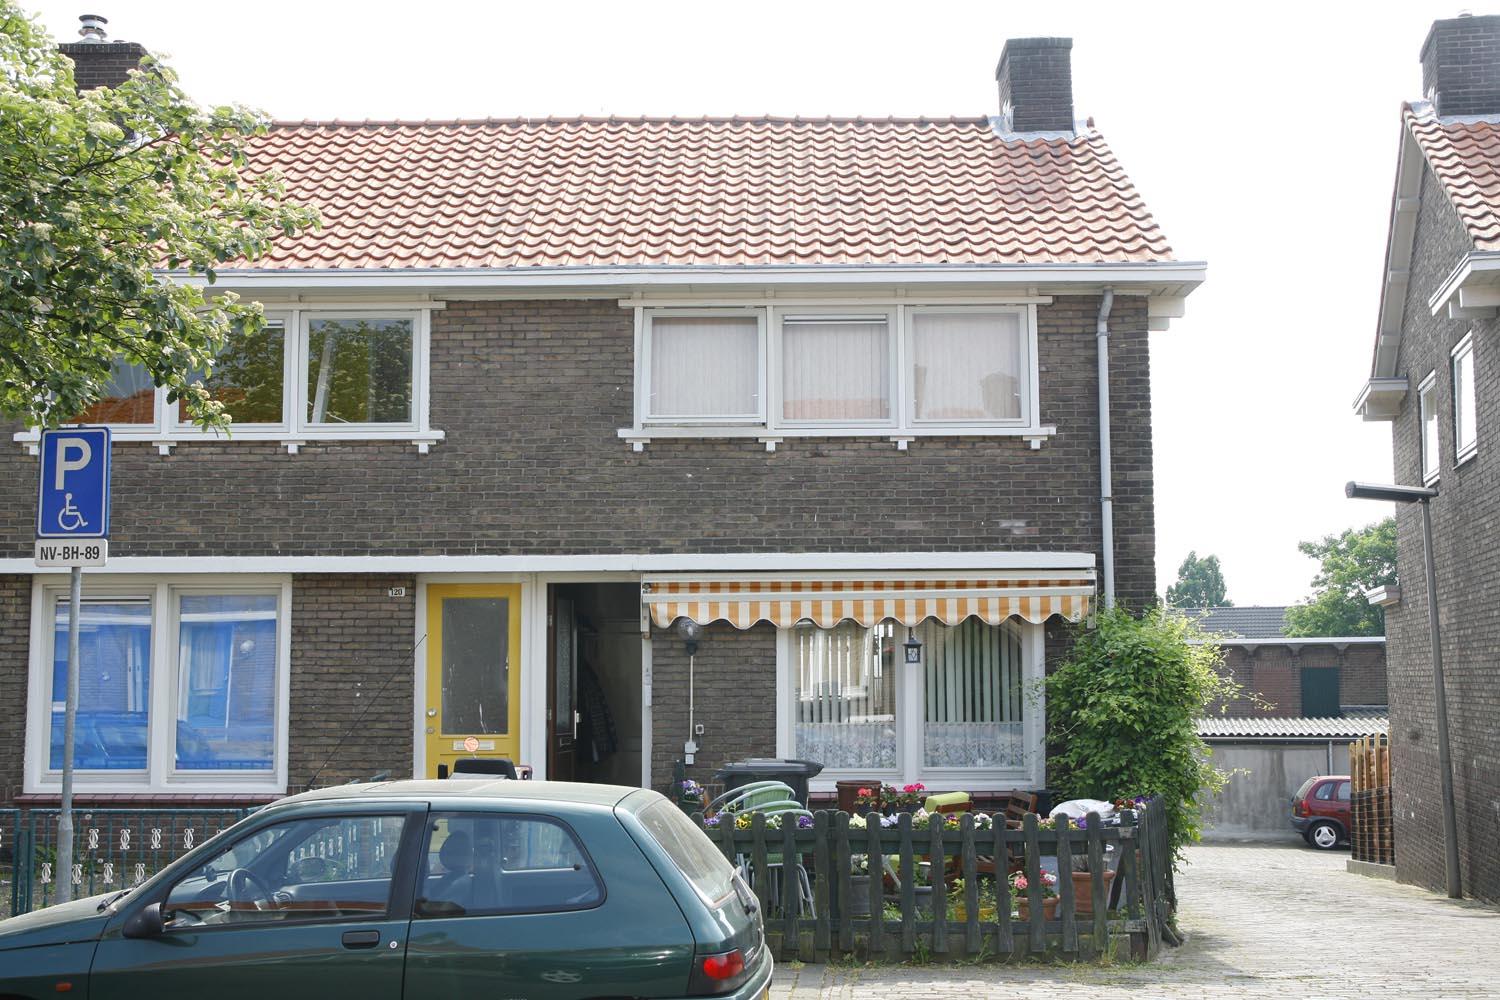 Sint Janskerkstraat 118, 6822 EN Arnhem, Nederland